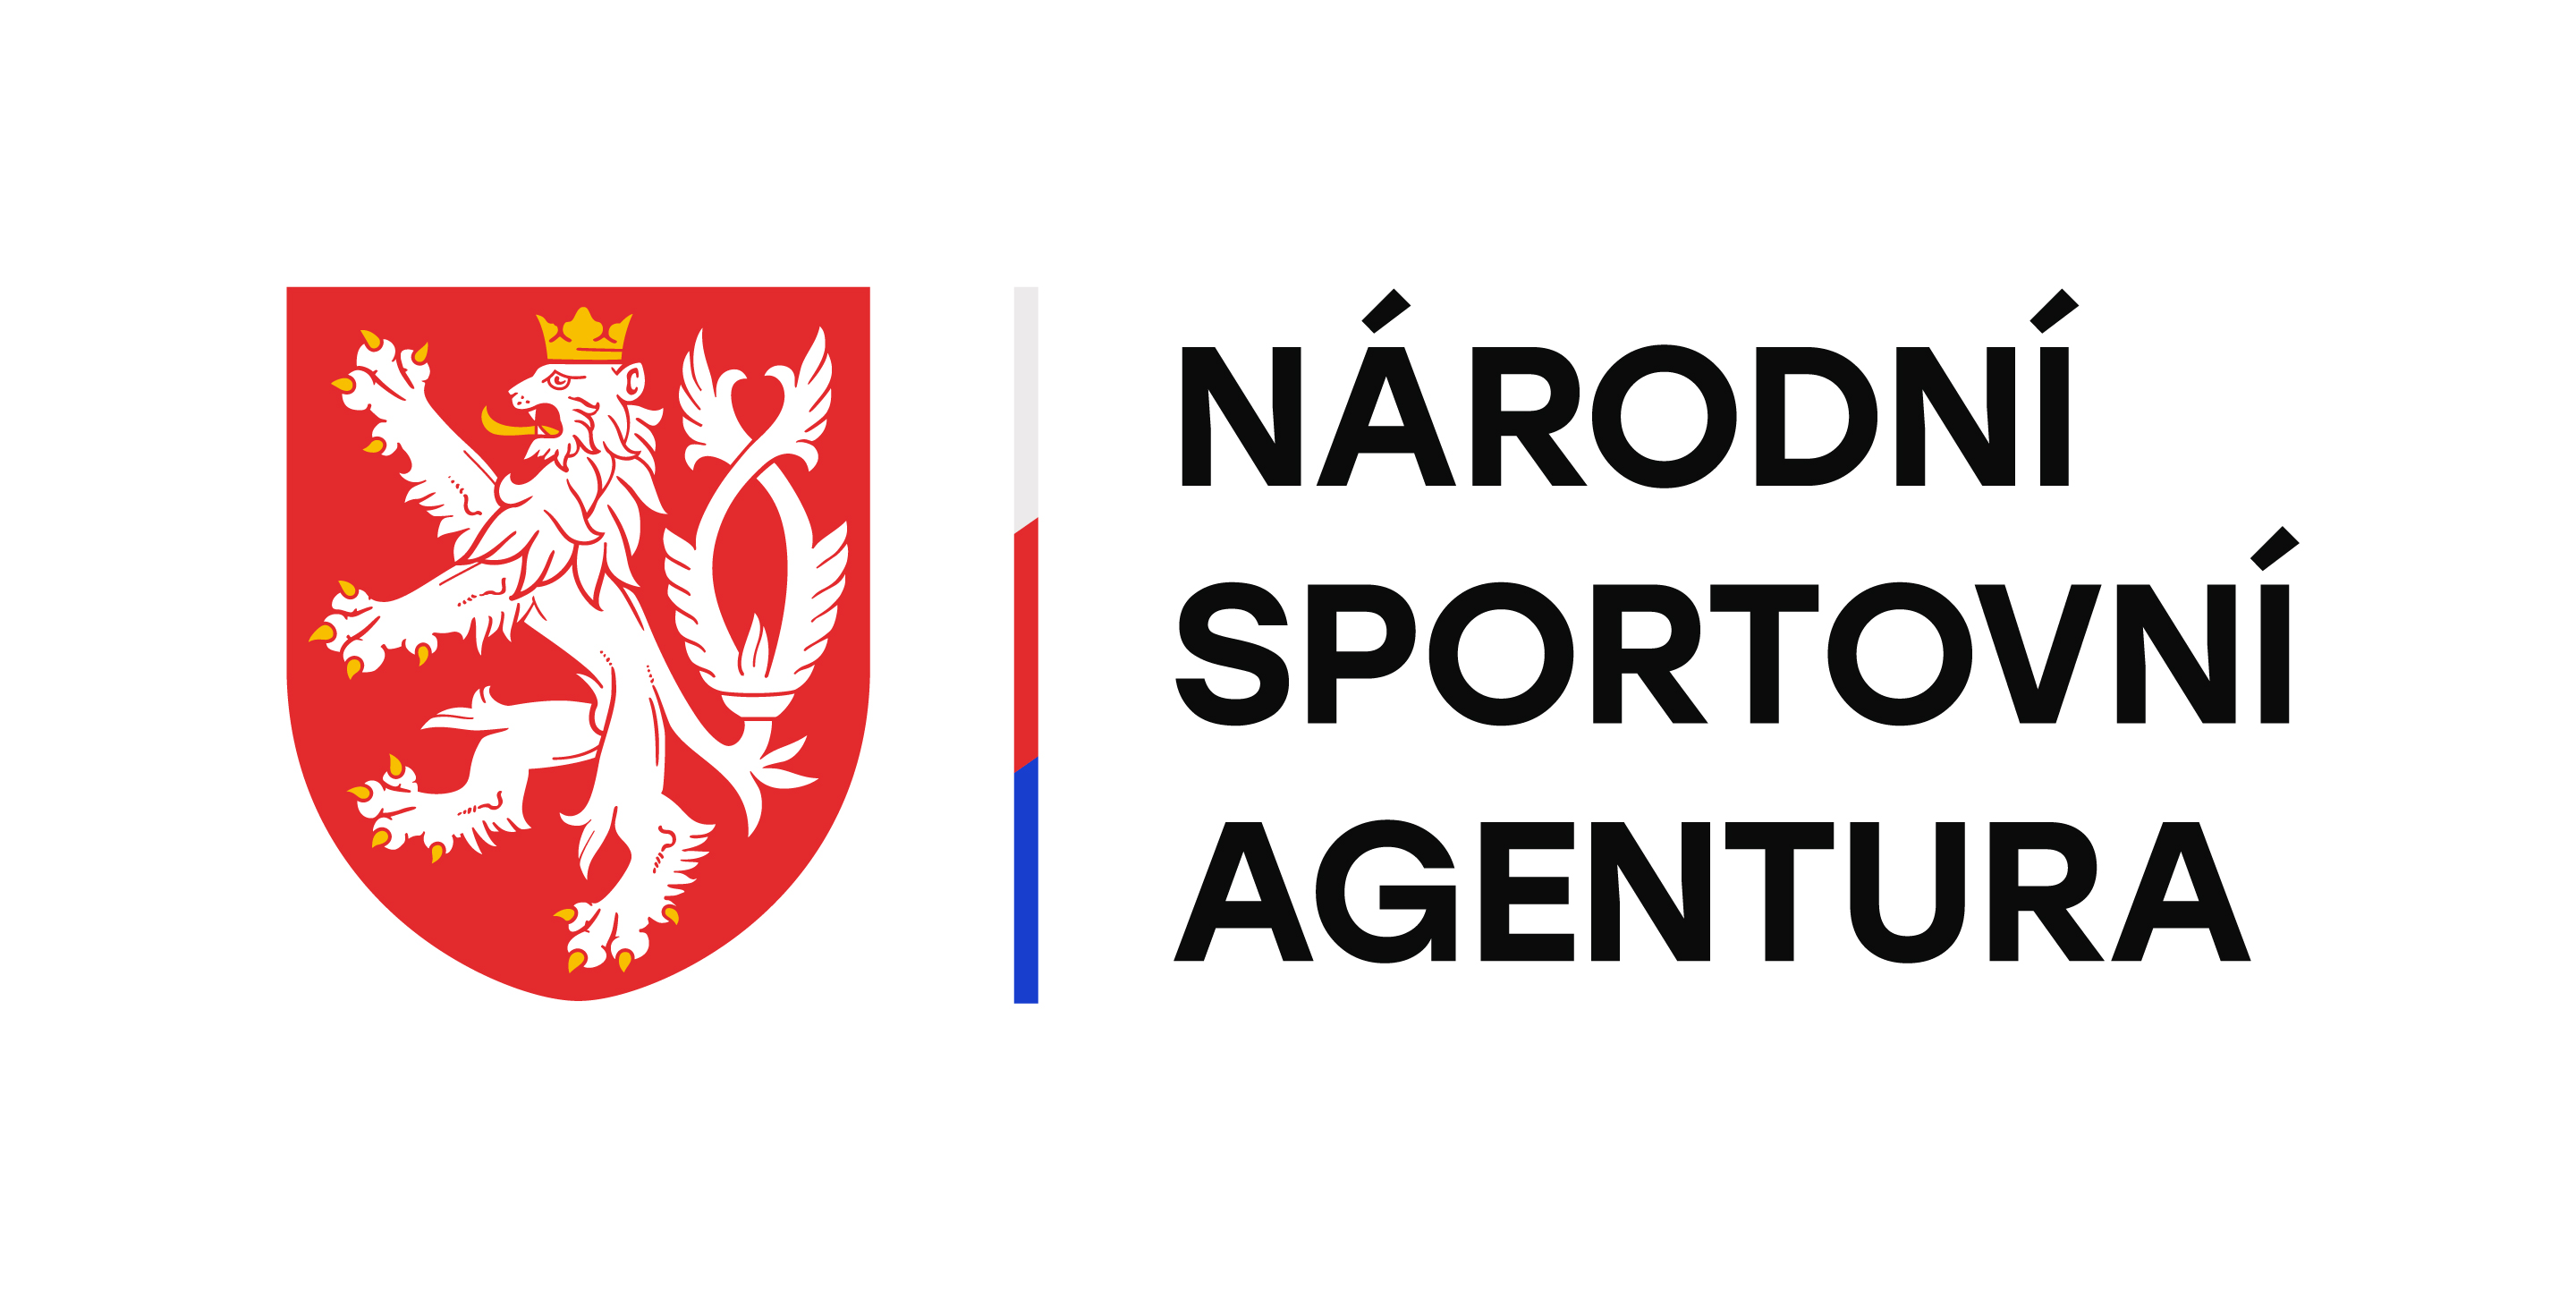 Narodni sportovni agentura_logo rgb.jpg (500 KB)